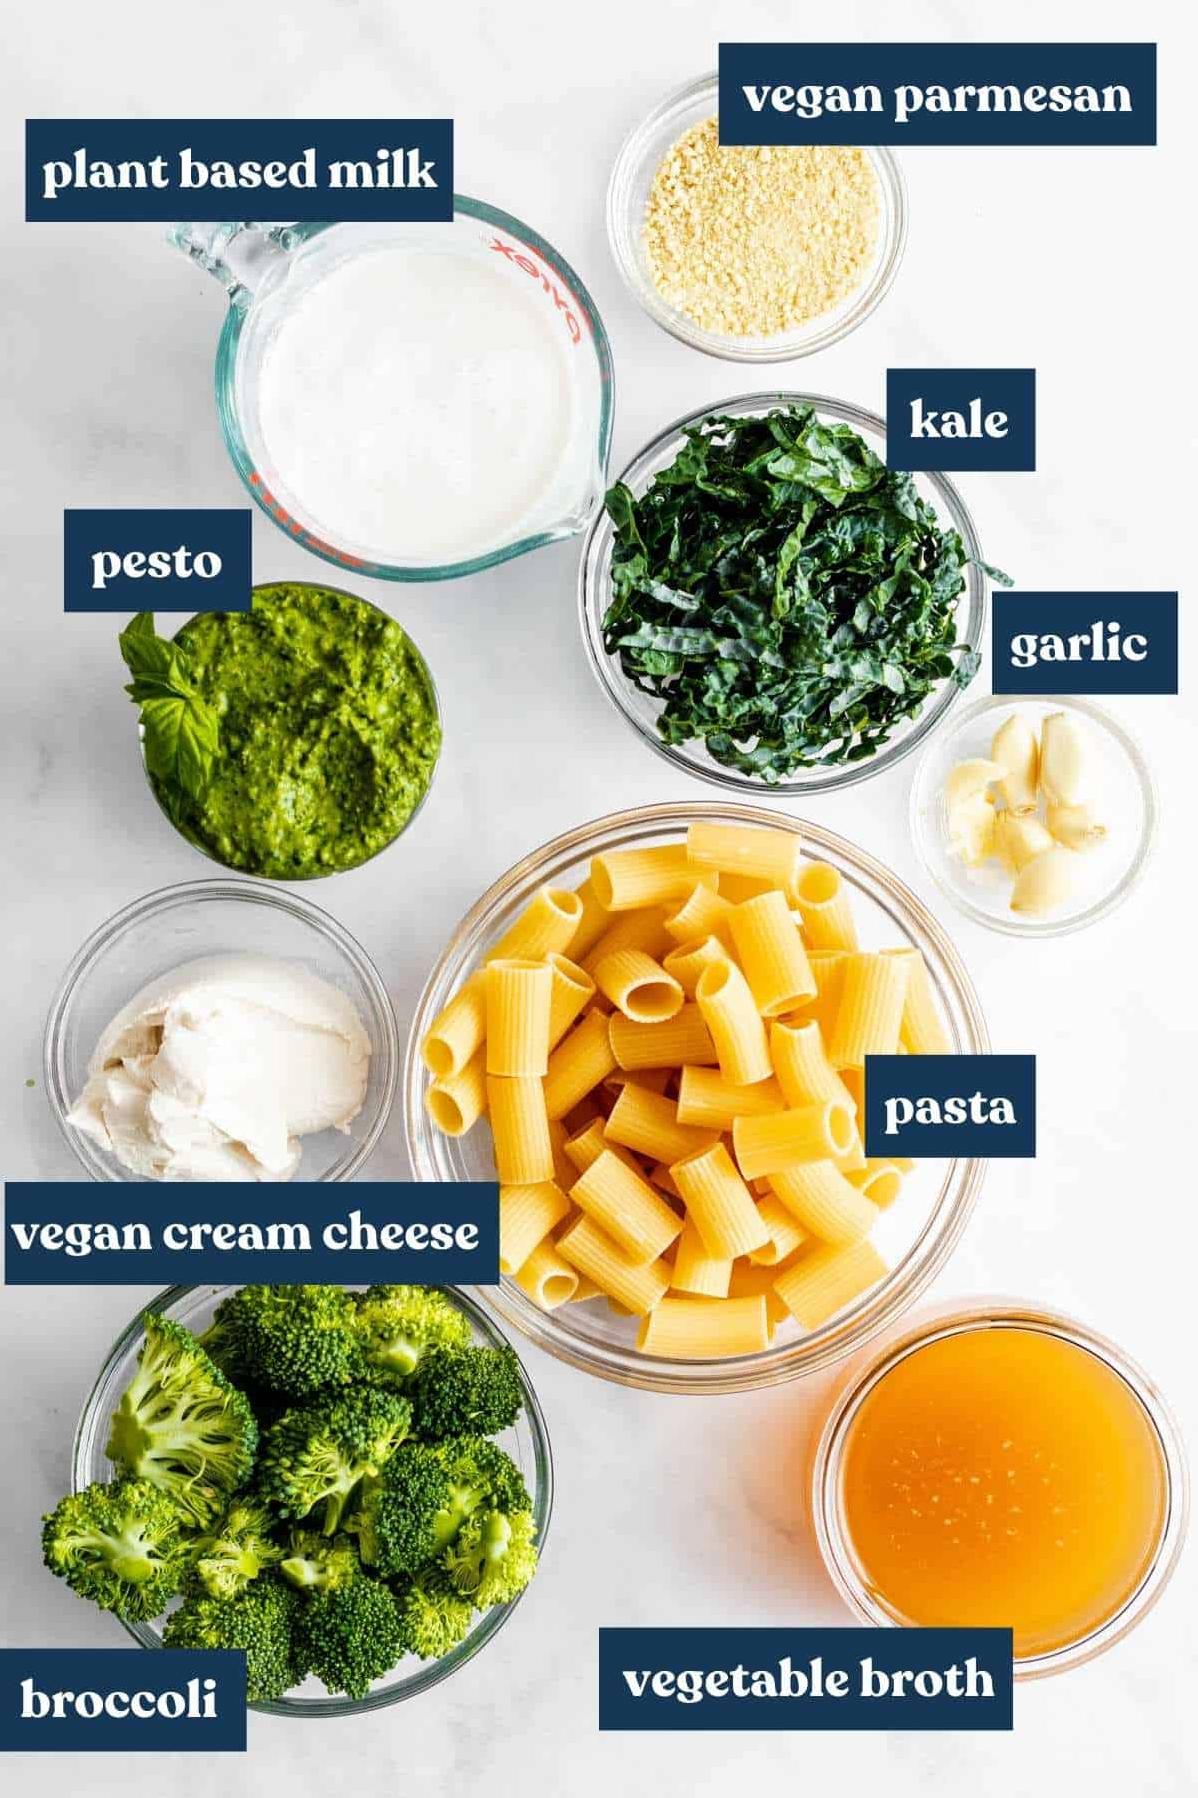  A bowl of comfort: creamy pesto pasta with broccoli